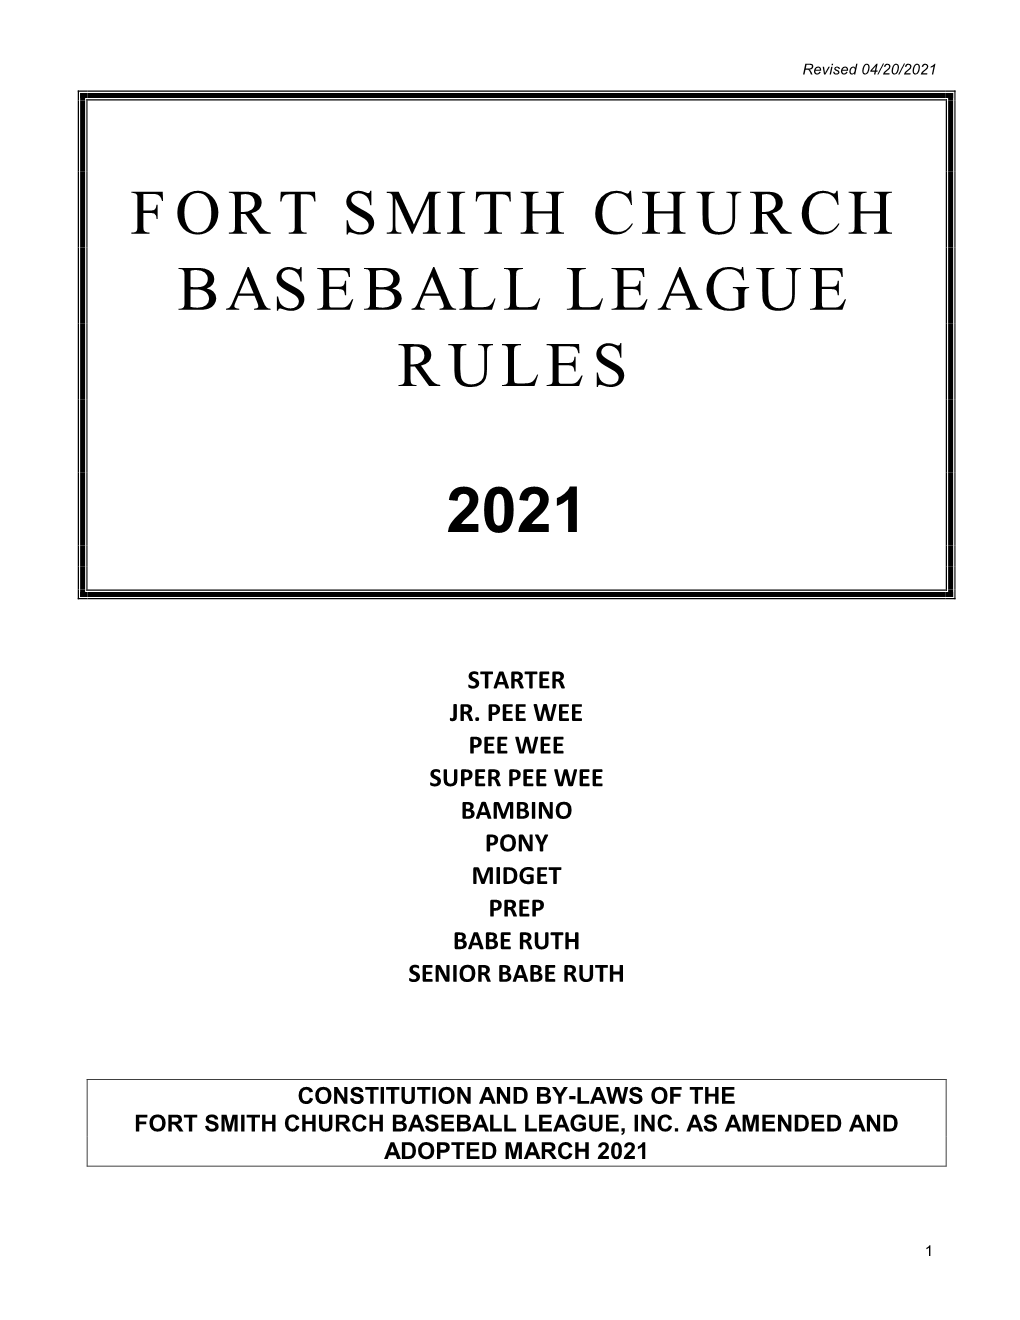 Fort Smith Church Baseball League Rules 2021